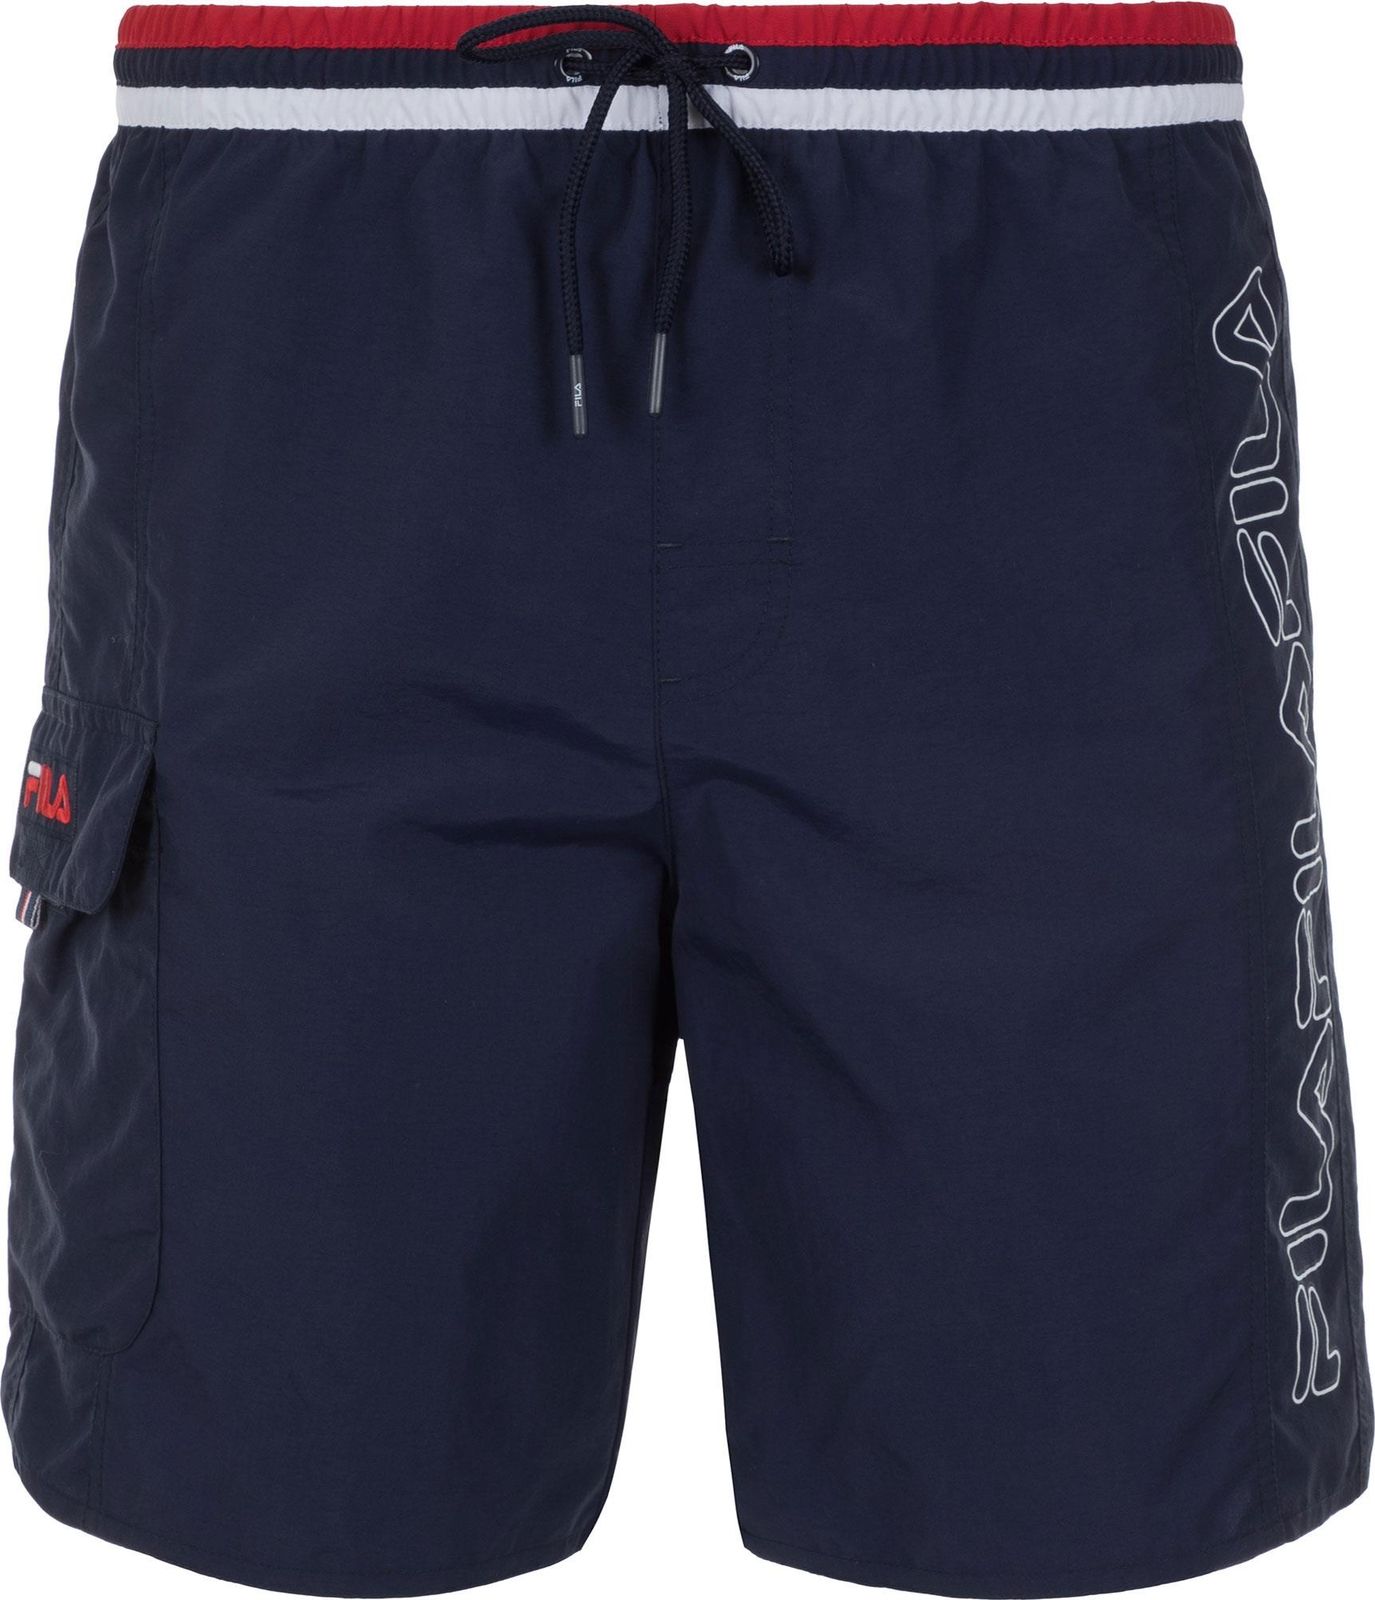   Fila Men's Shorts, : -. S19AFLSHM03-Z4.  L (50)